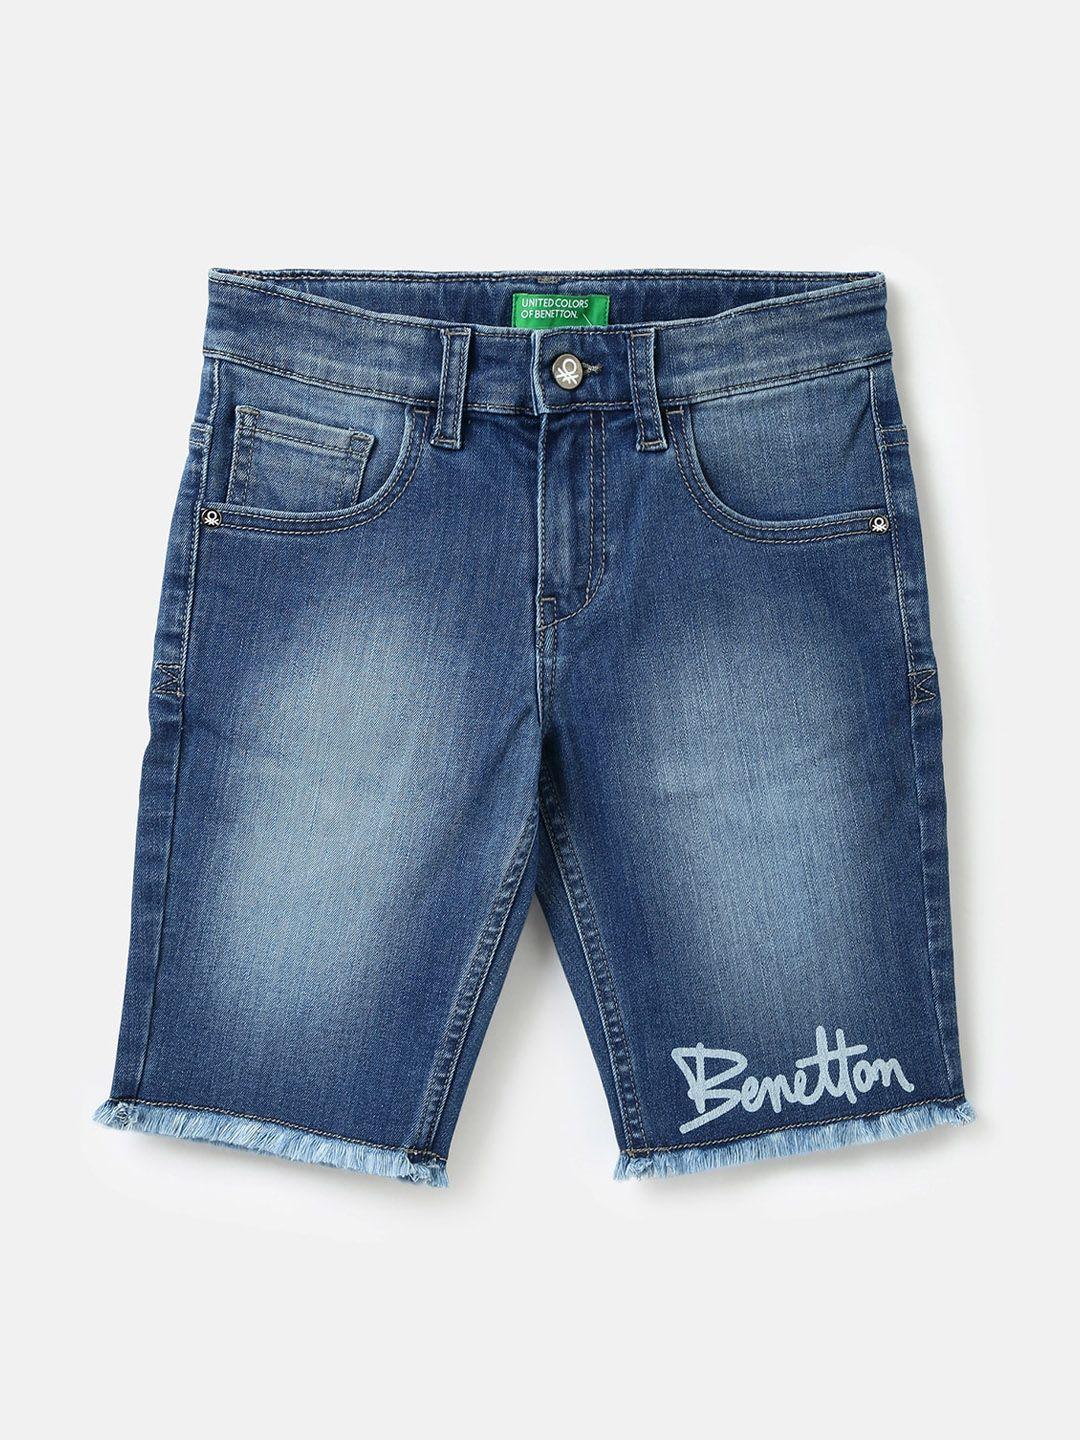 united colors of benetton boys denim shorts